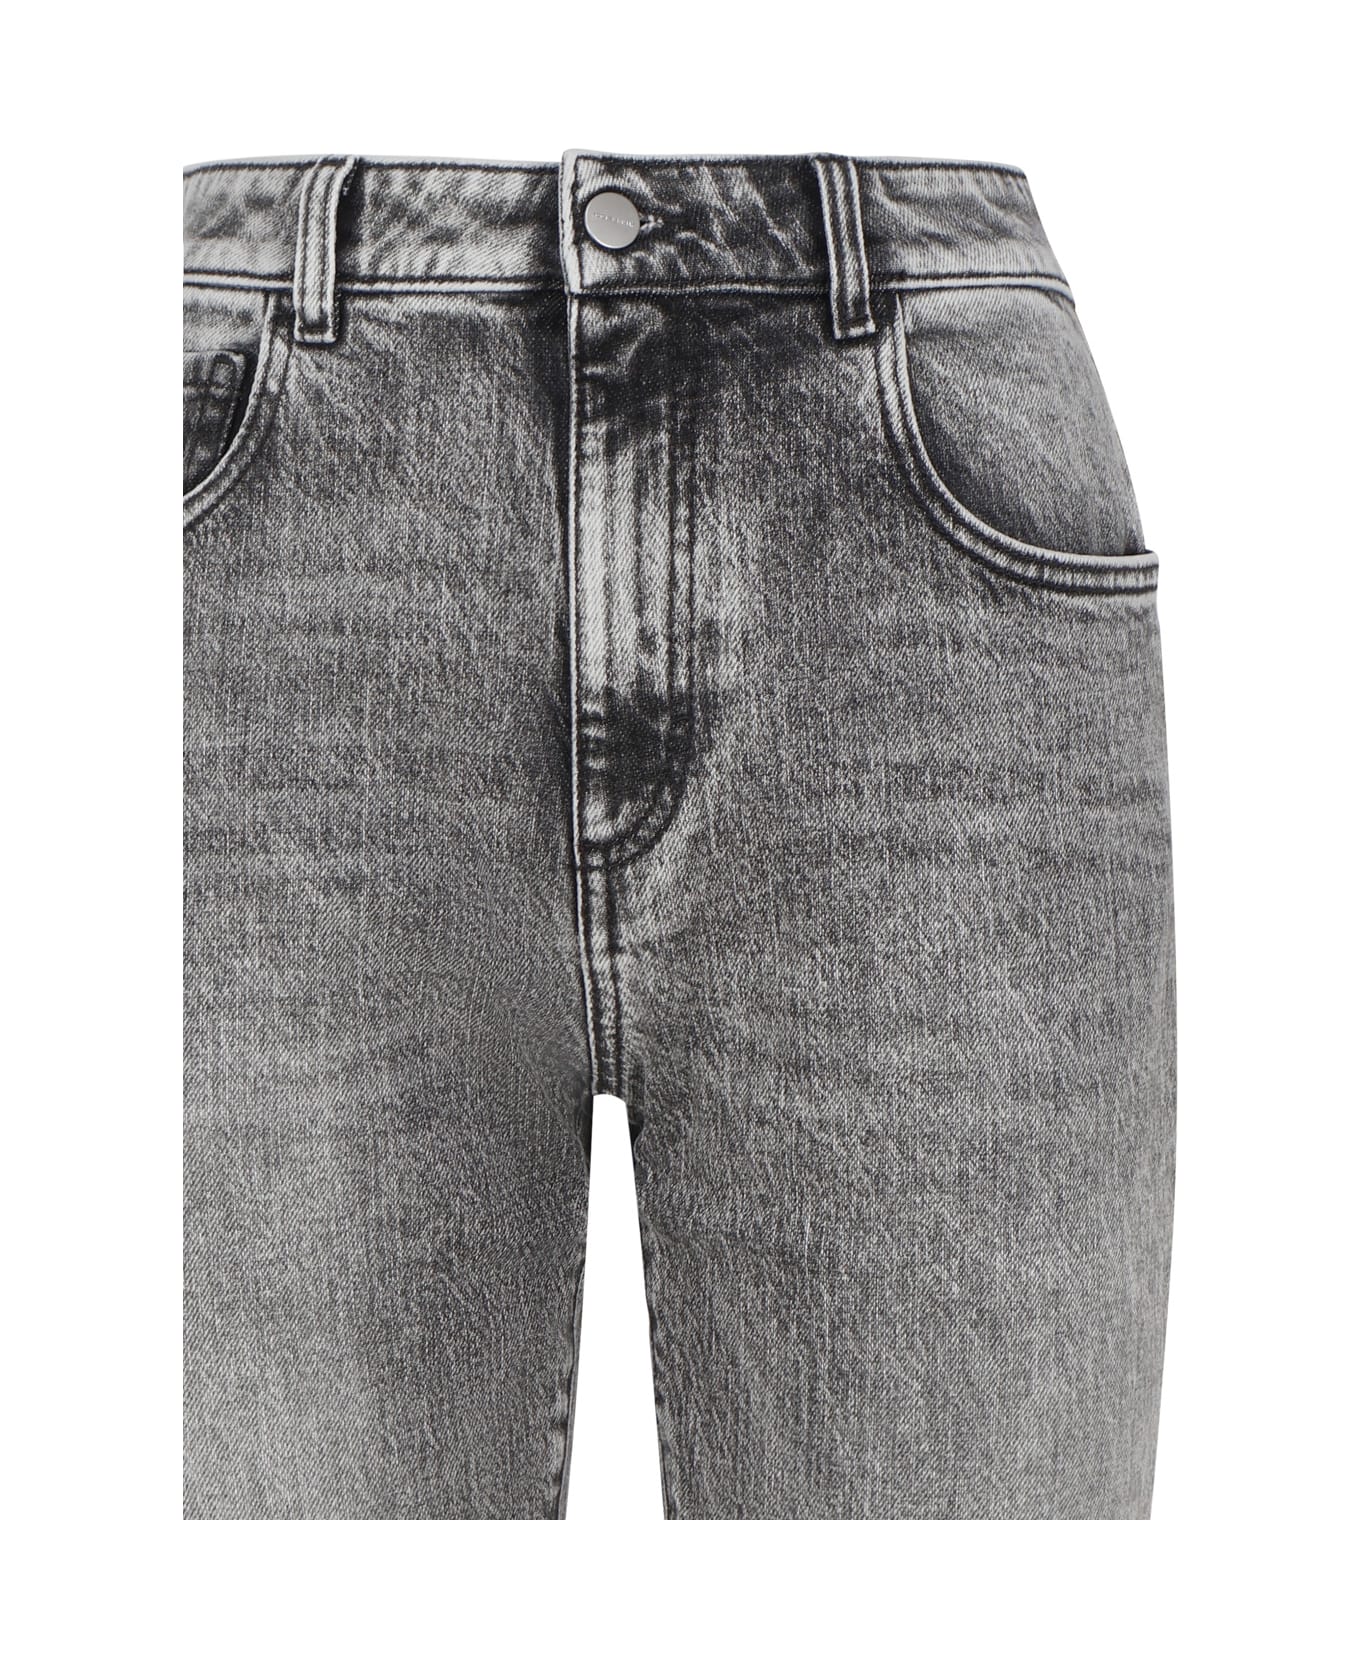 Icon Denim Vintage Effect Jeans - Grey デニム